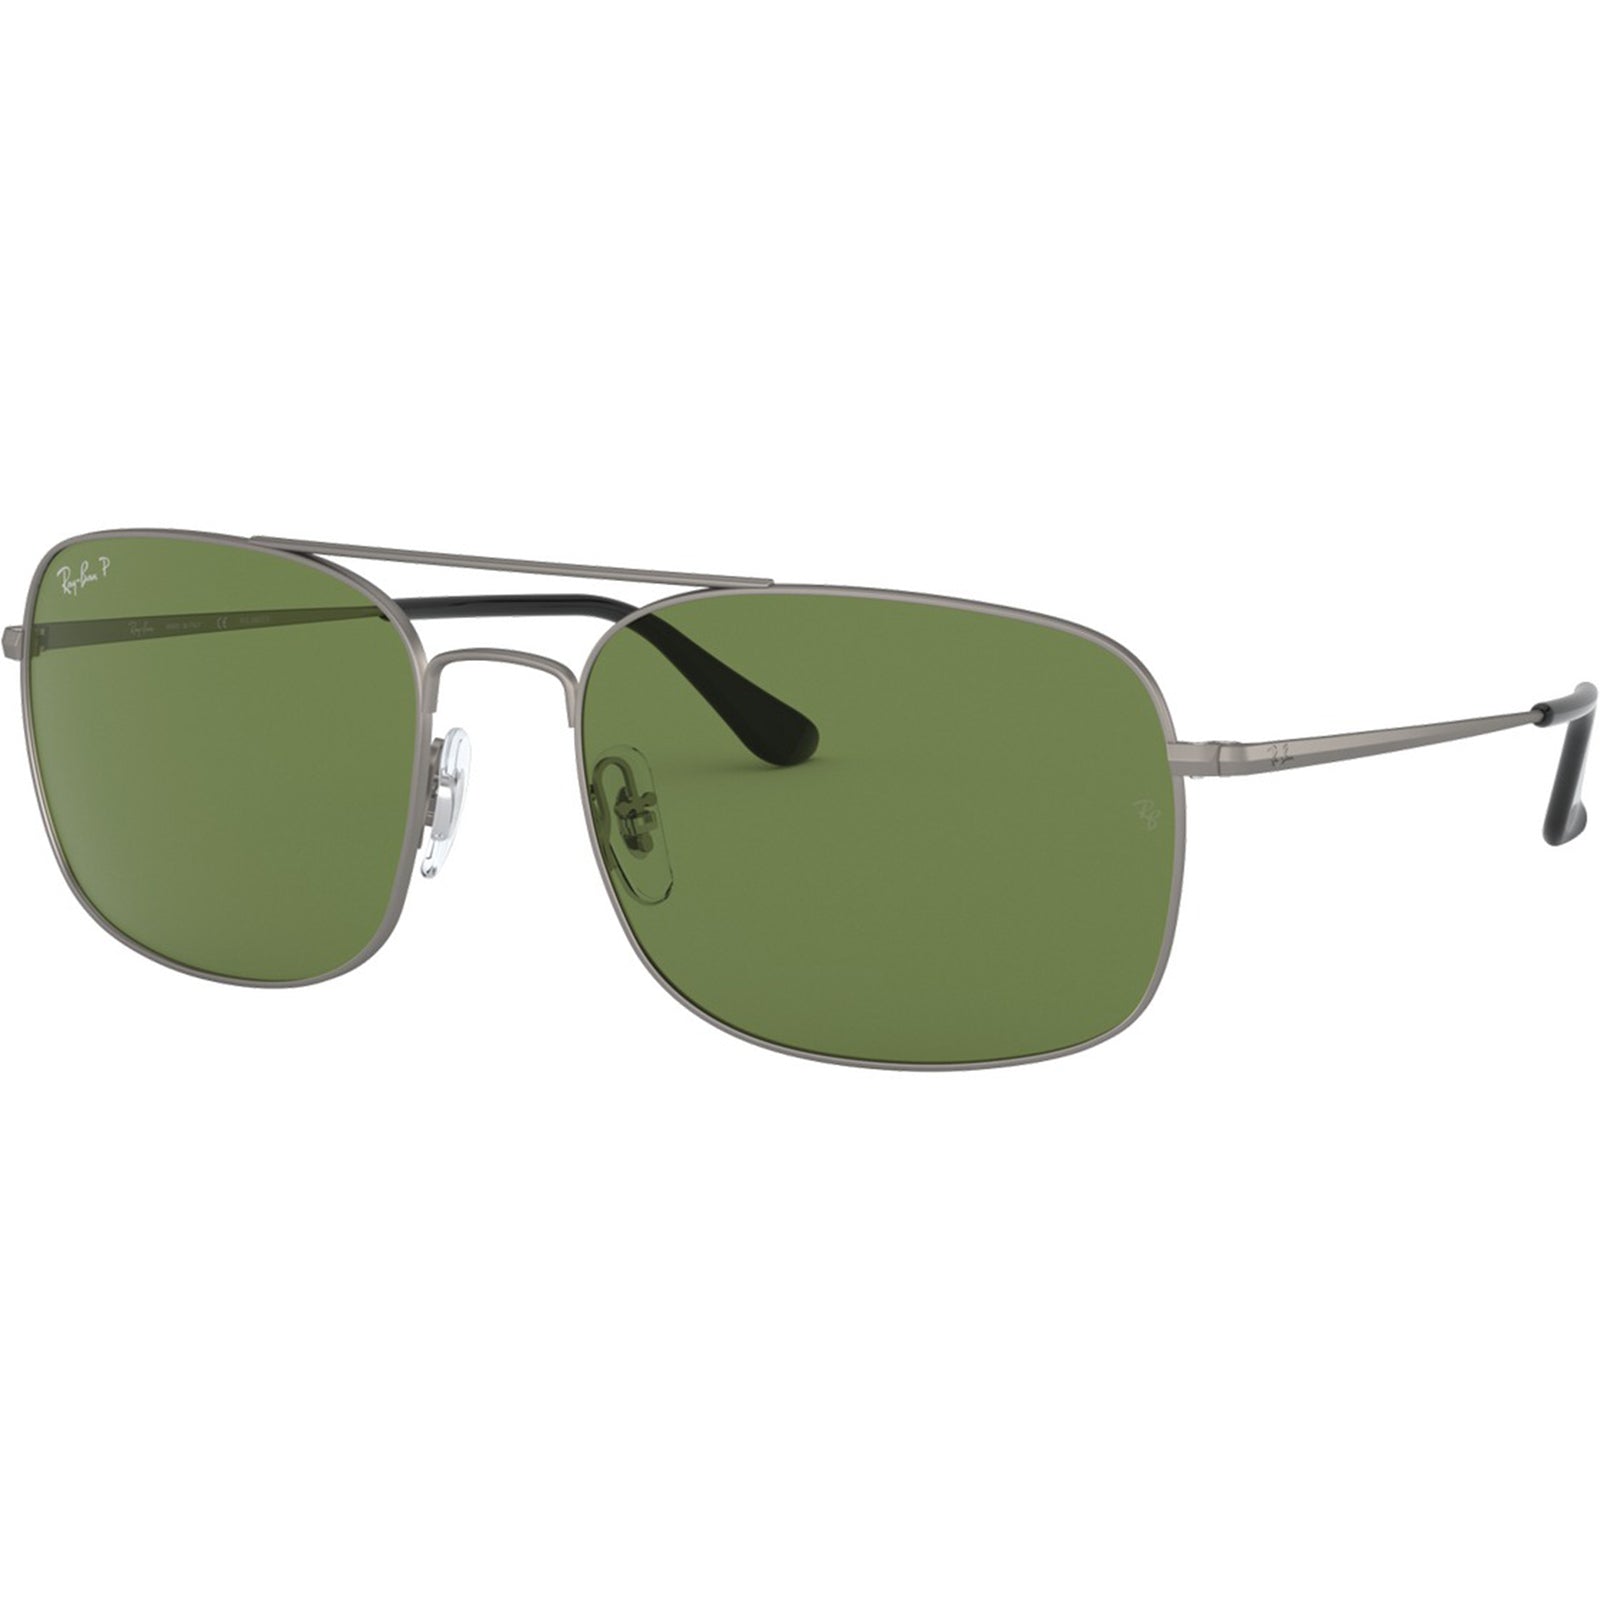 Ray-Ban Sunglasses : Amazon.co.uk: Fashion